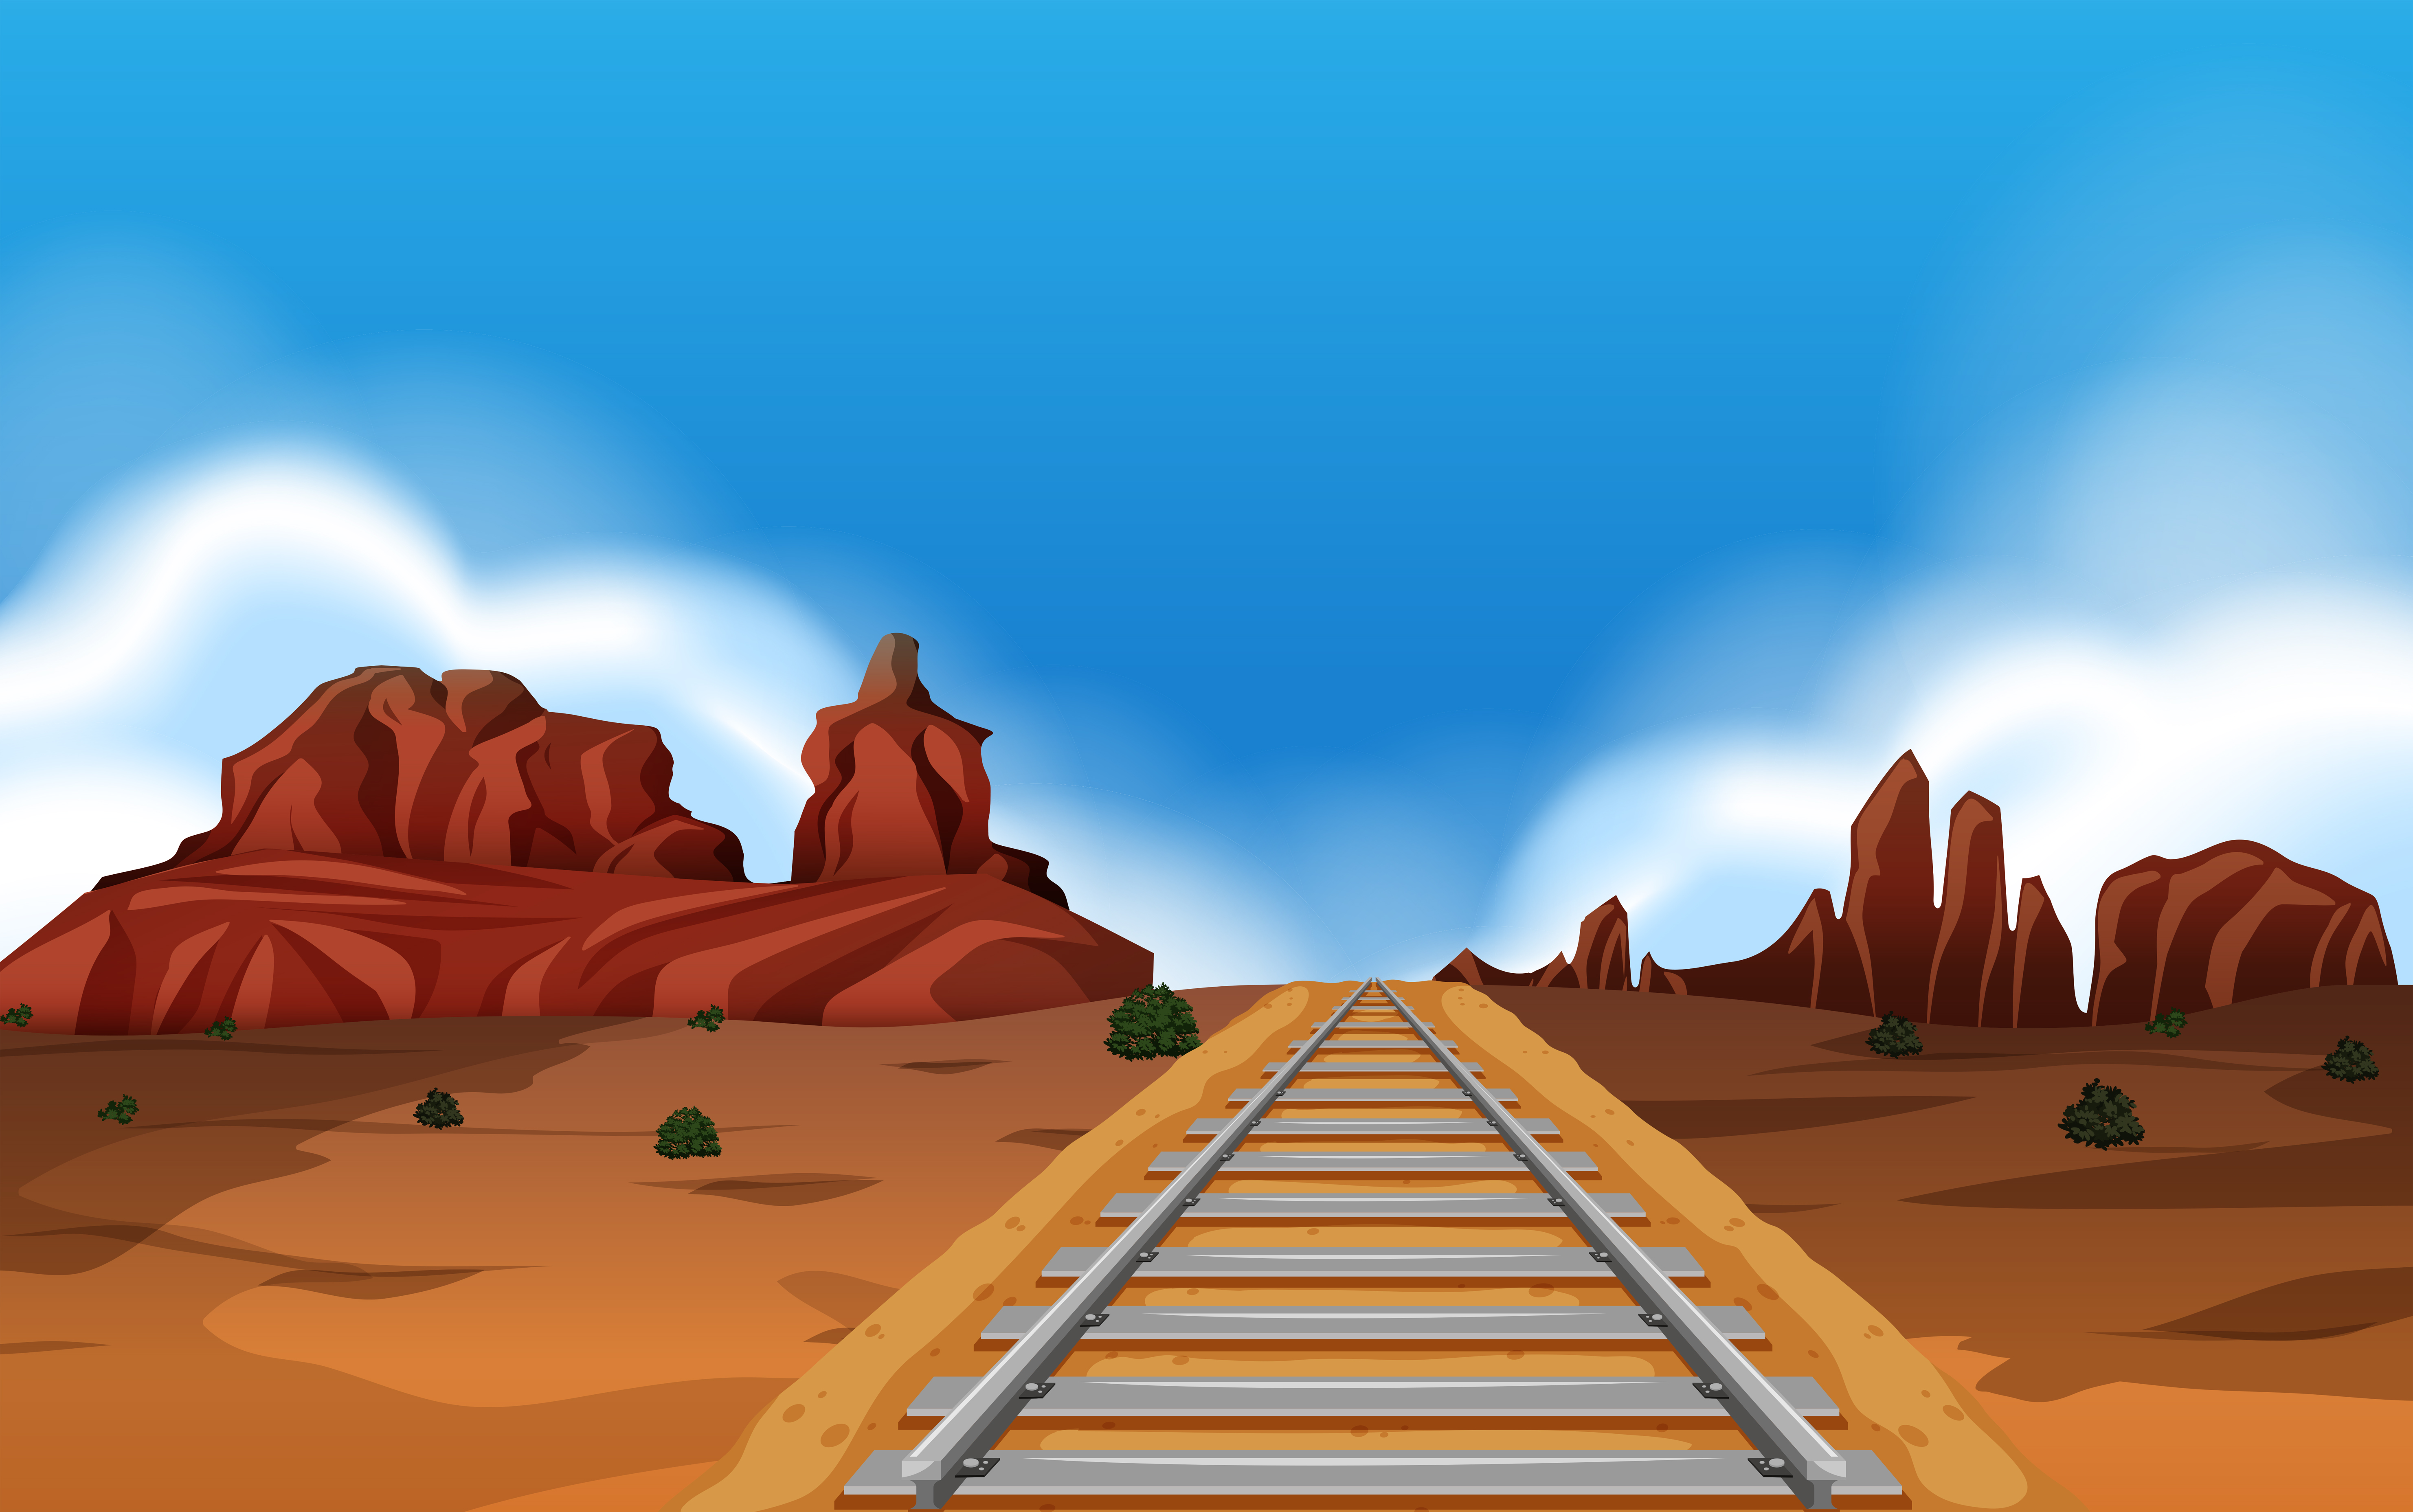 Train Track In Wild West Background Download Free Vectors Clipart Graphics Vector Art